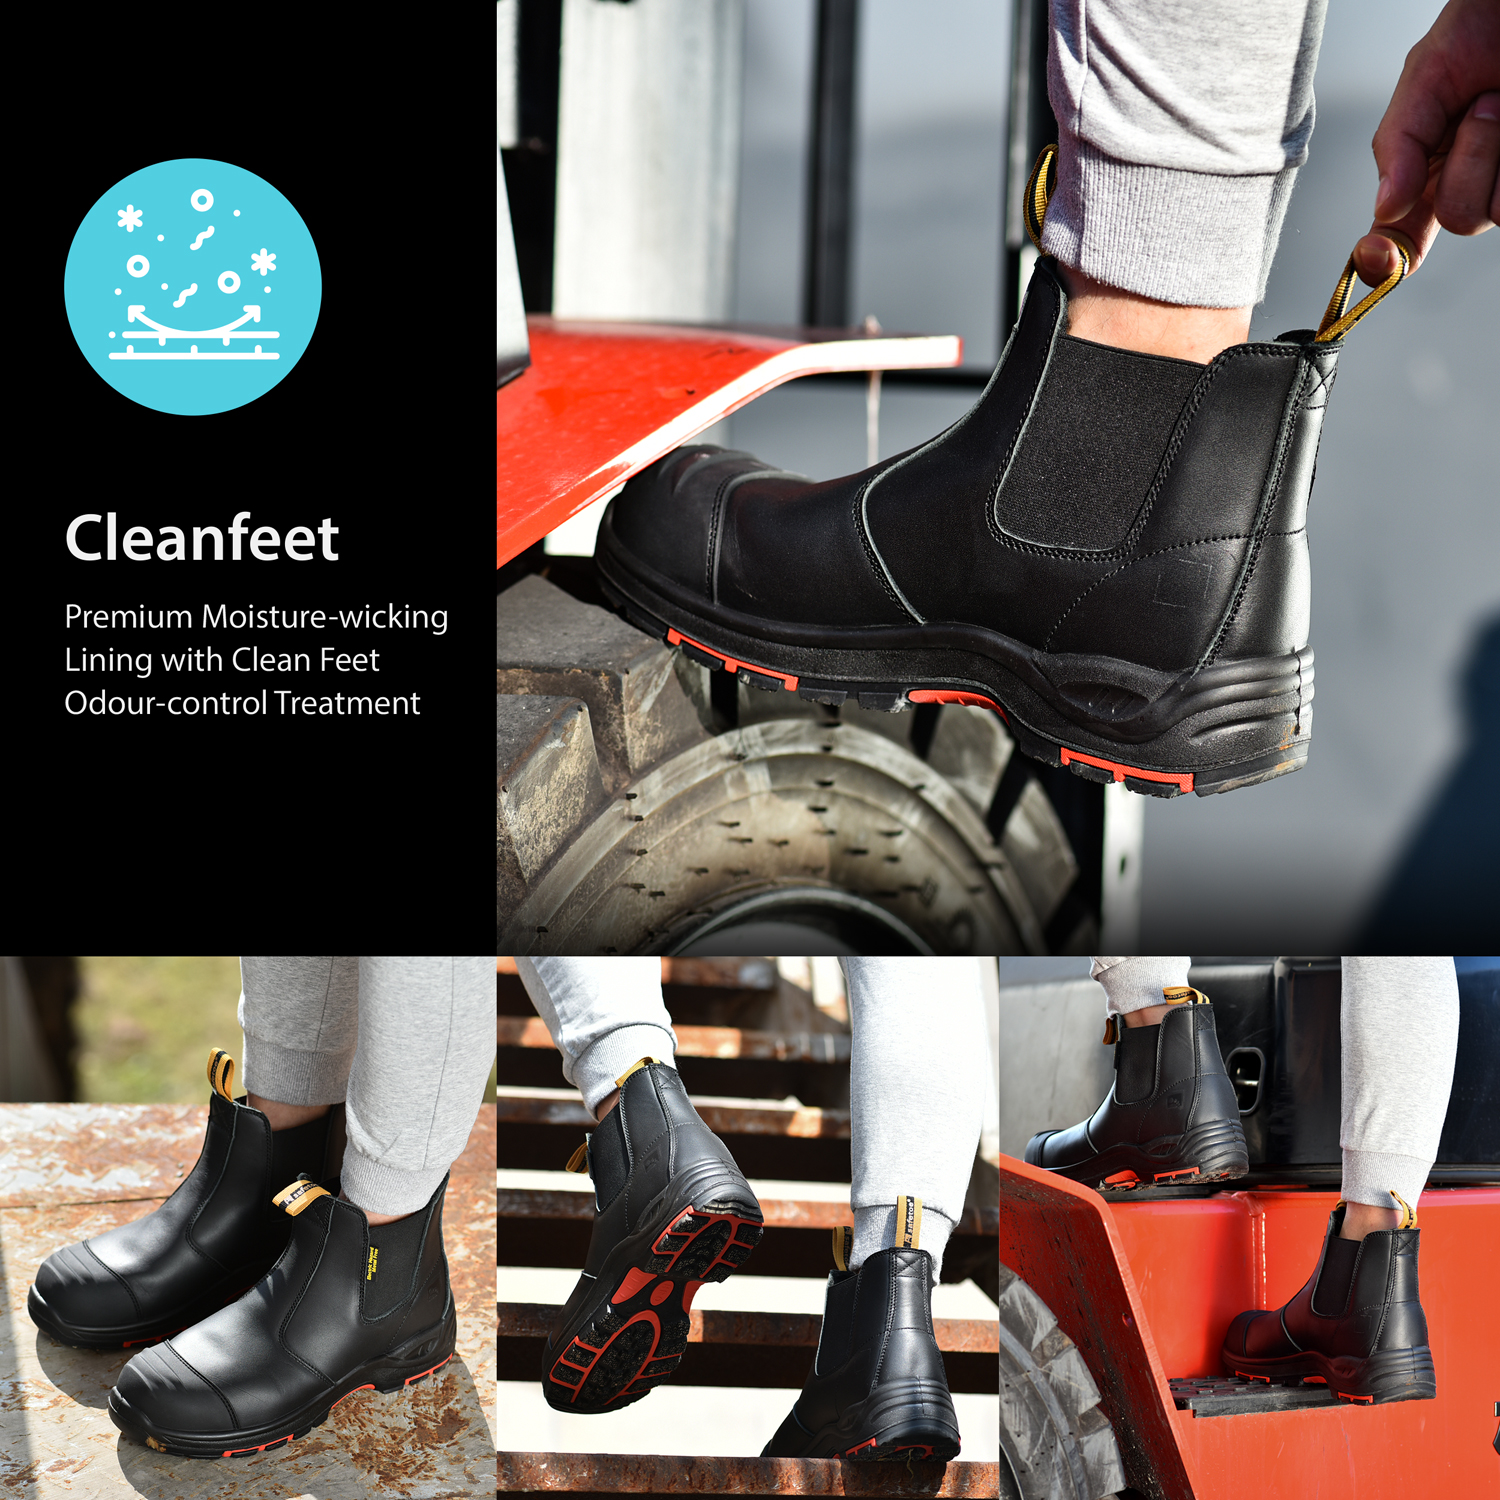 clean feet work boots